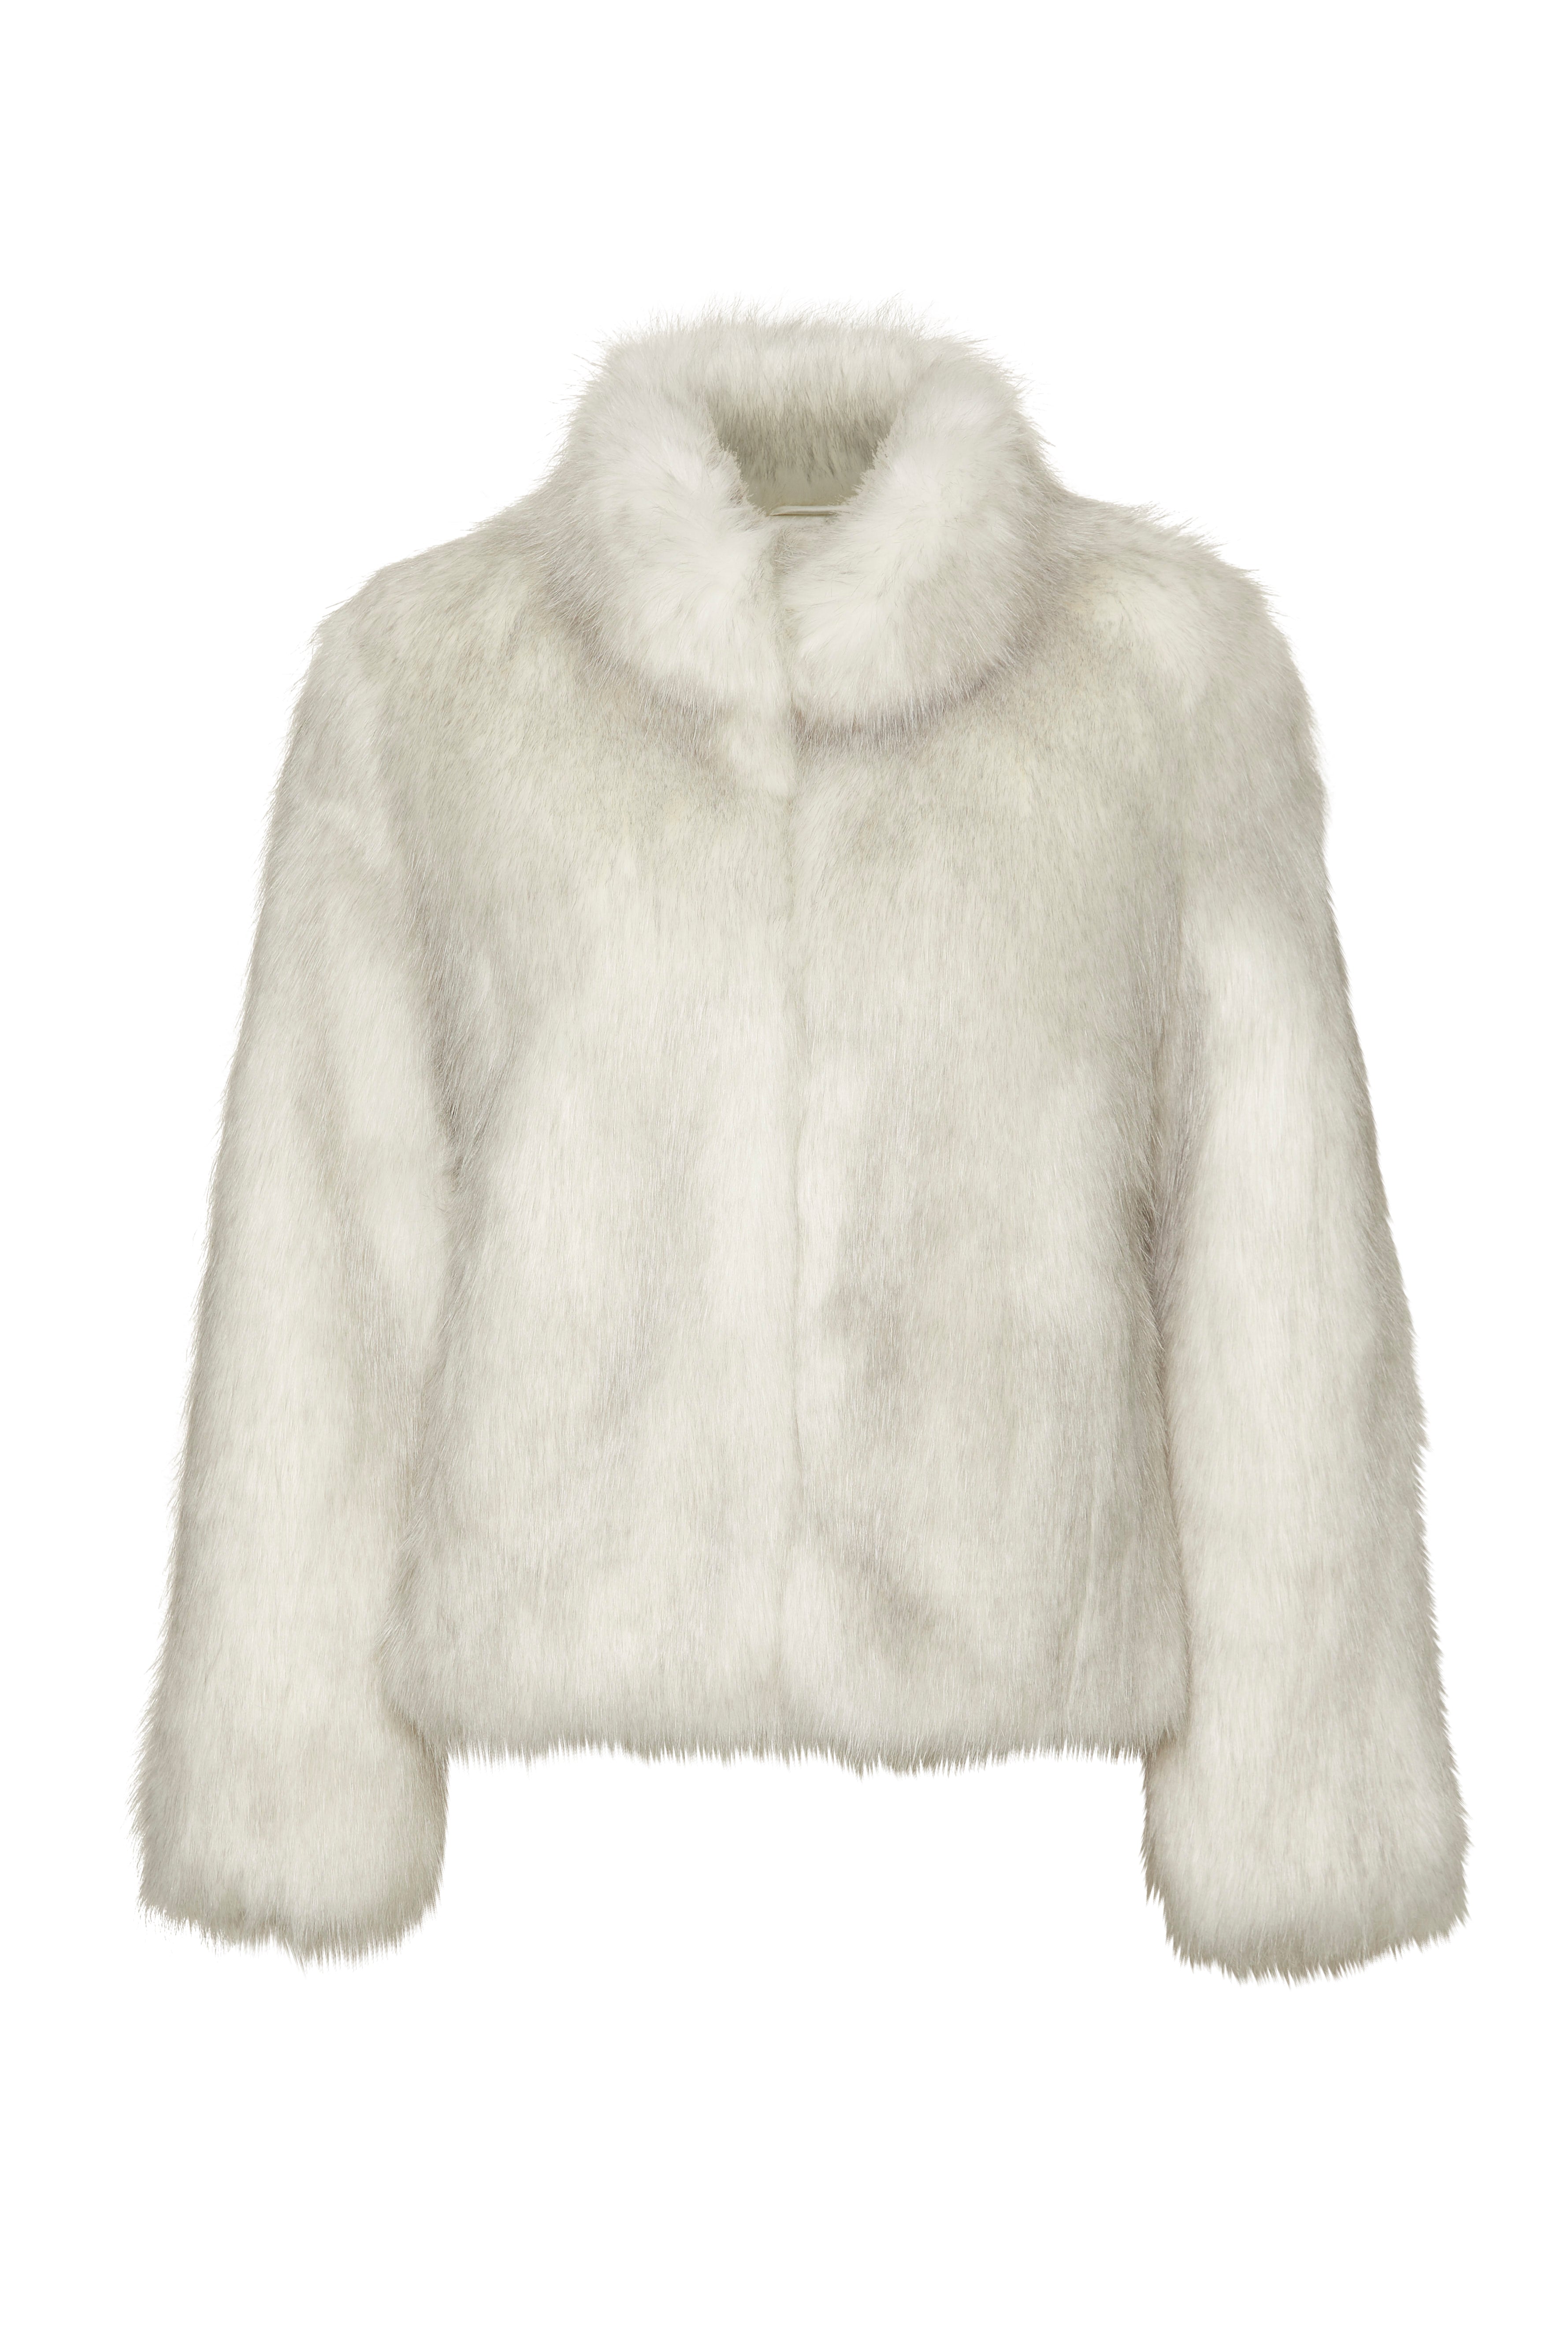 Buy swiss-white Unreal Fur Delish Jacket